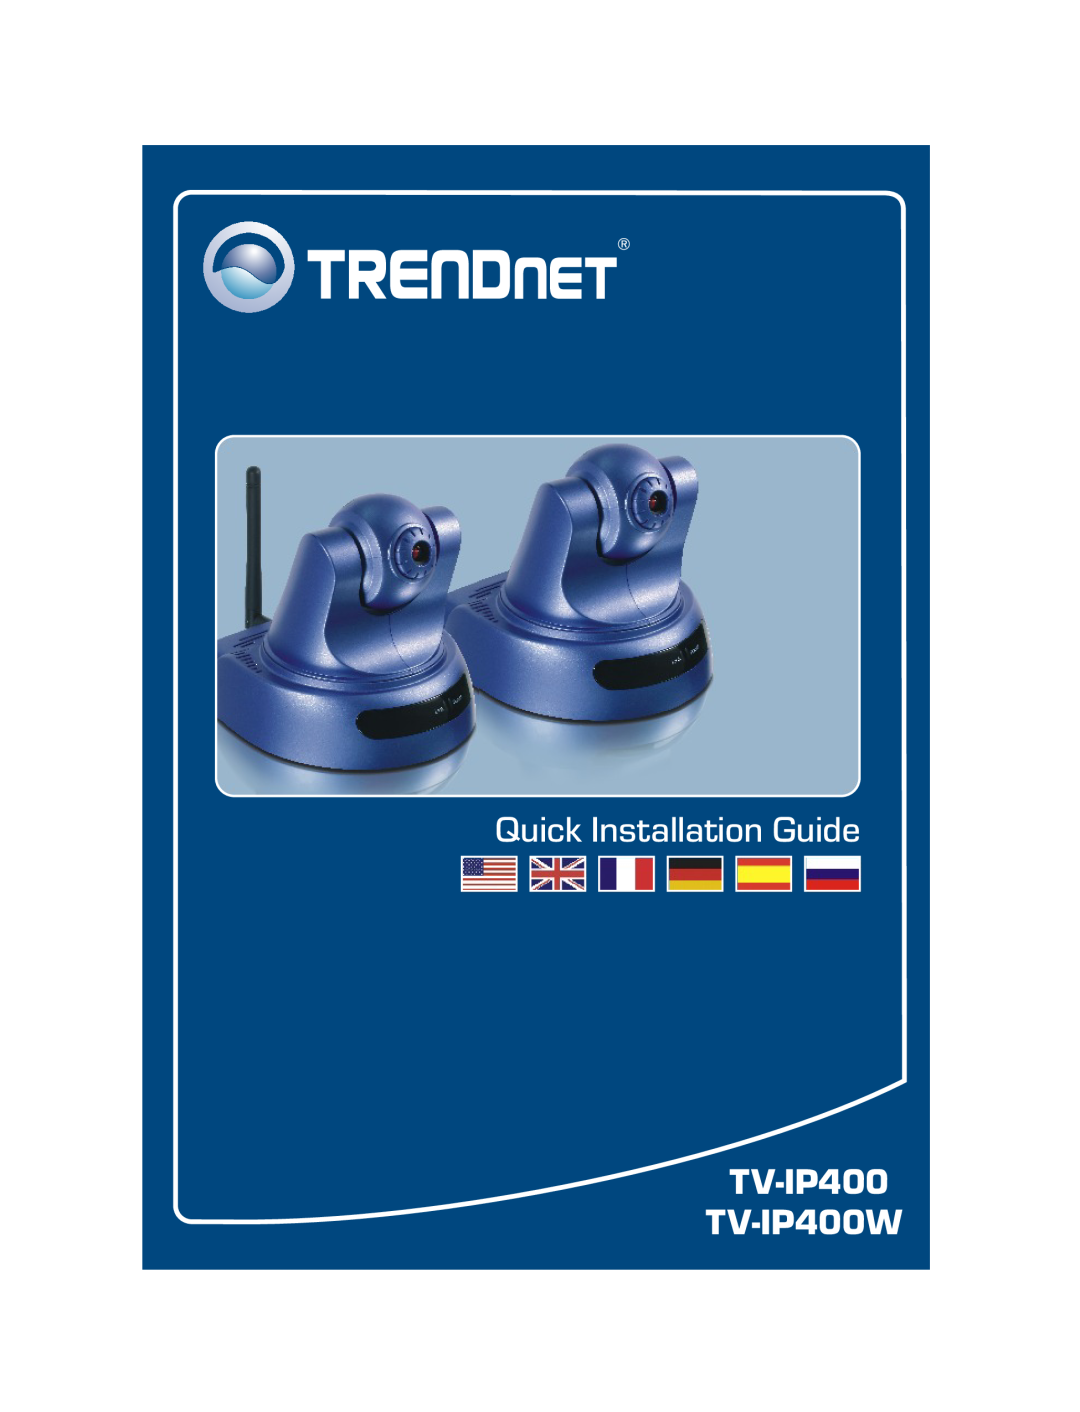 TRENDnet TEW-623PI, TRENDNET manual Quick Installation Guide 